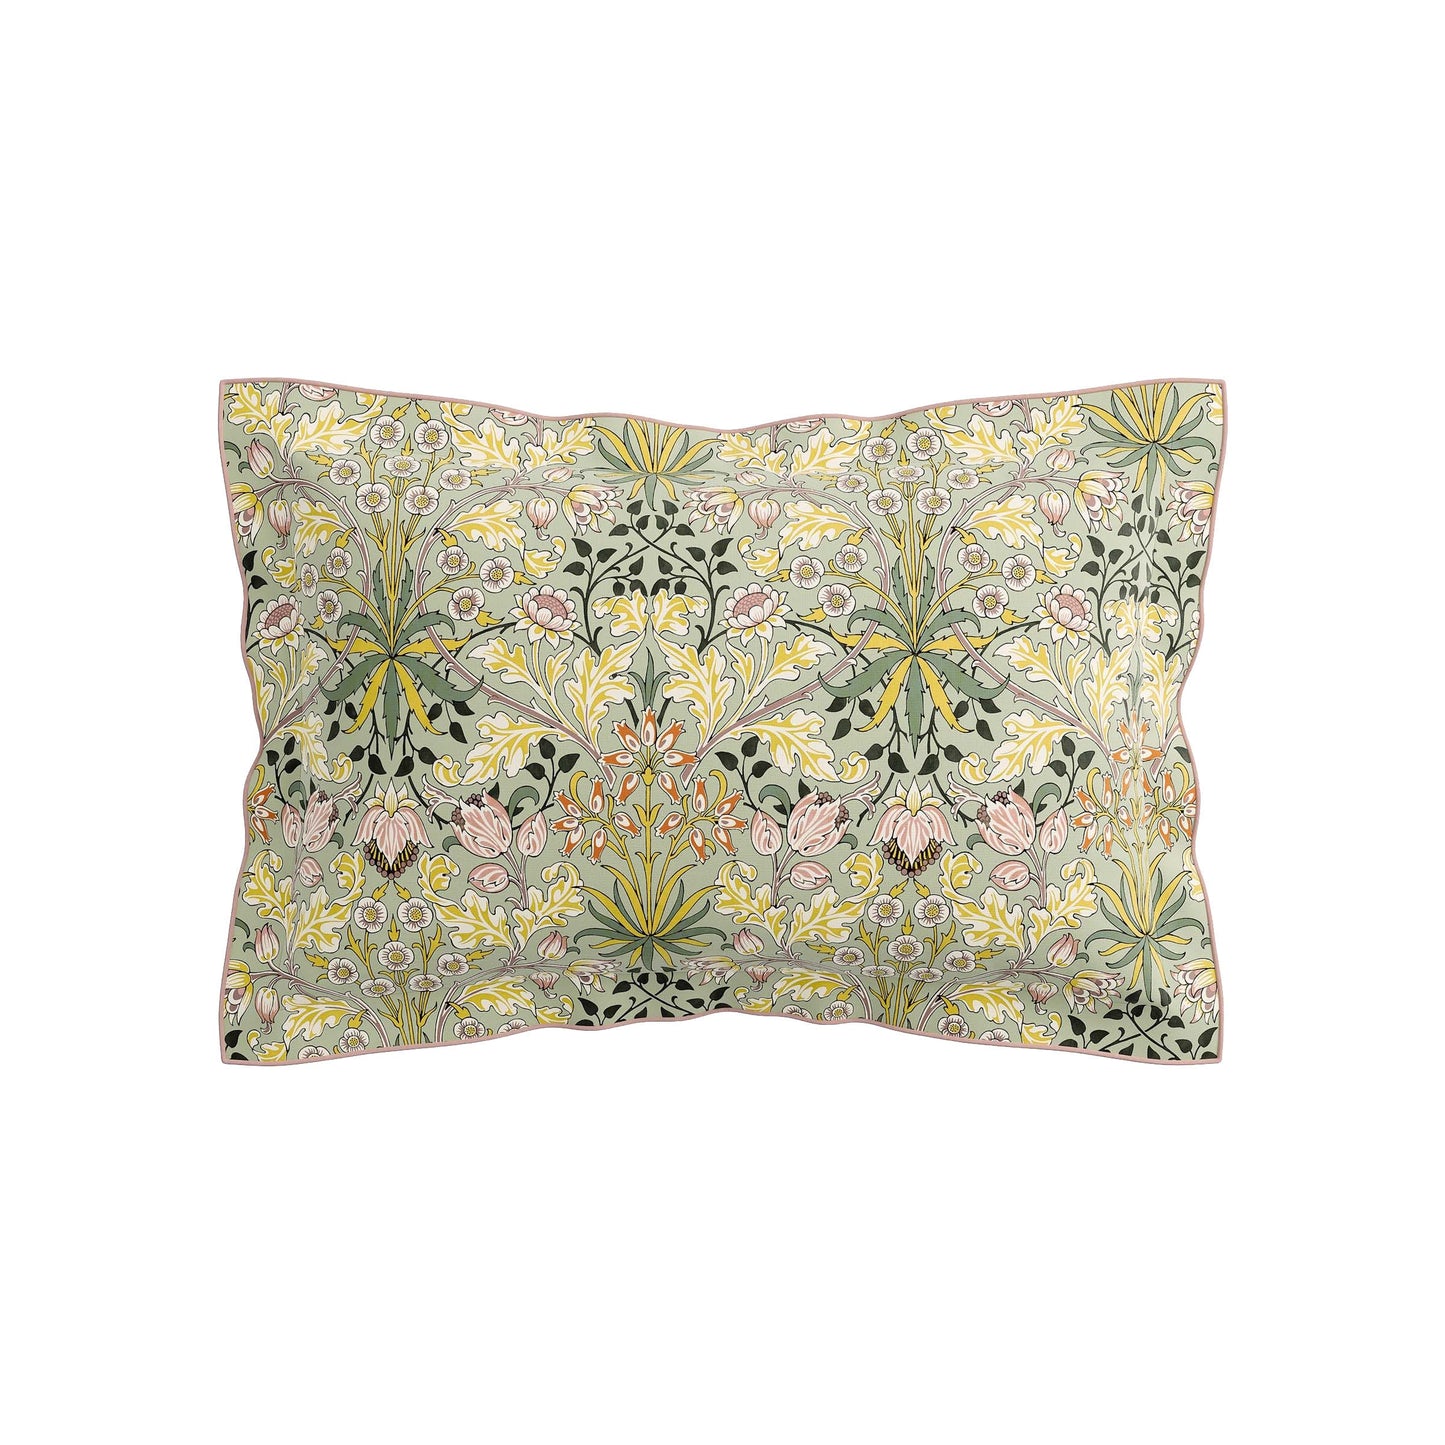 William Morris Hyacinth duvet cover set pattern sage citrus